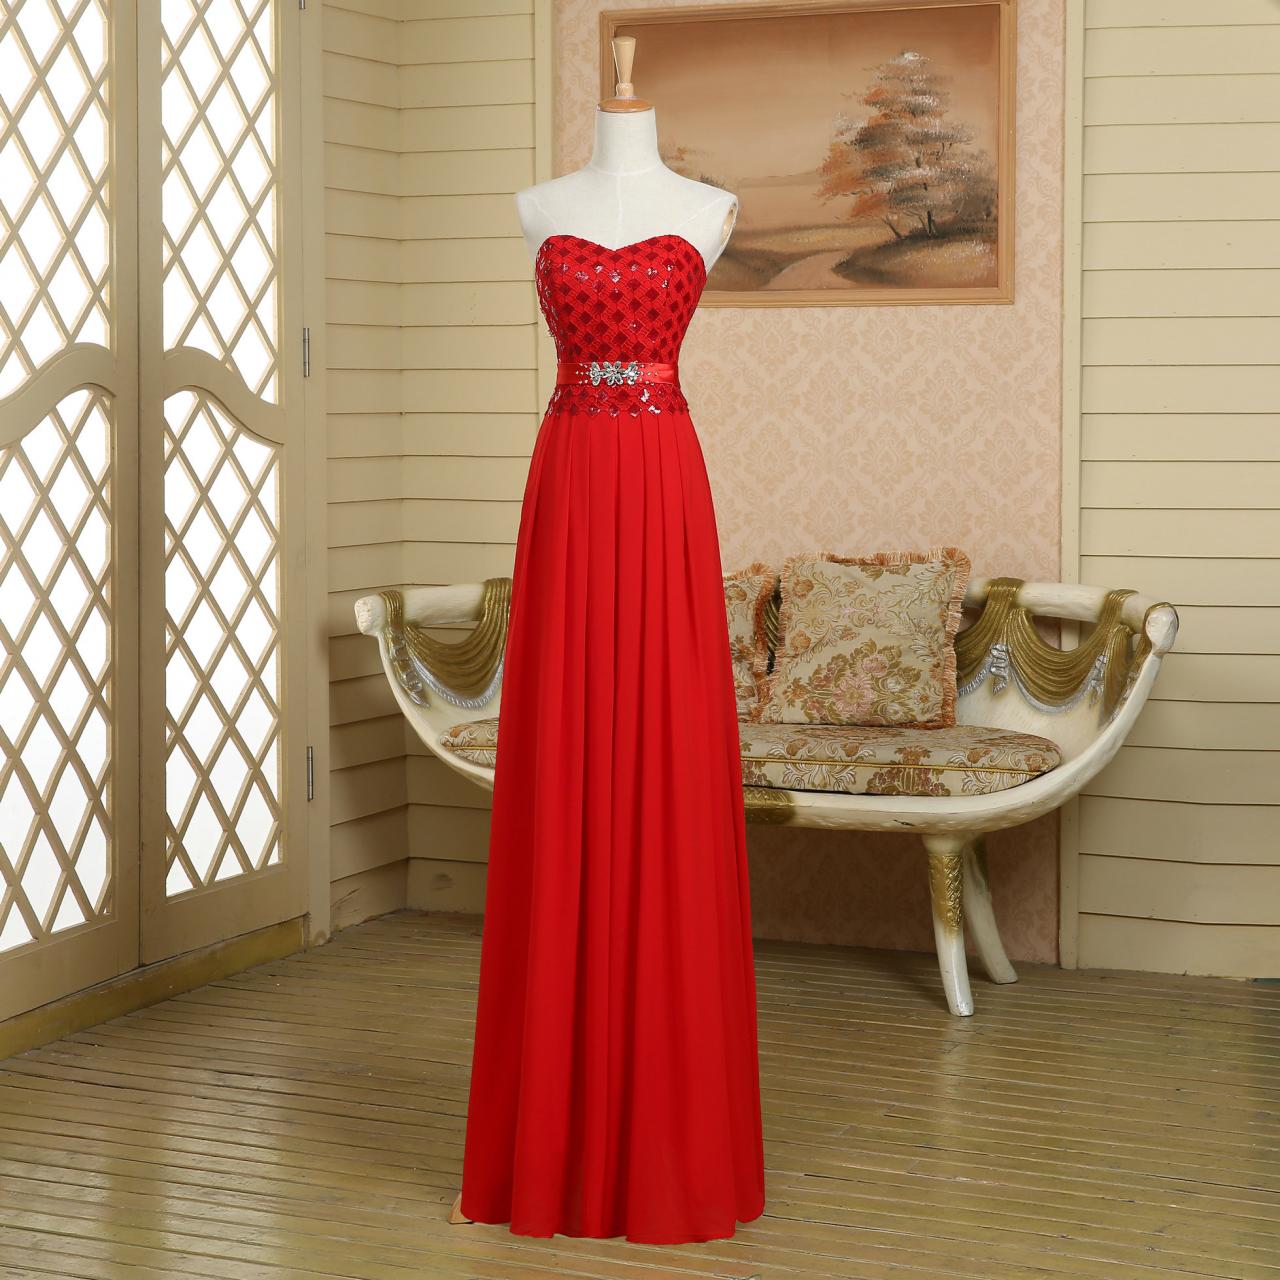 Strapless Sweetheart Red Chiffon Sequin Long Beading Rhinestone Prom Dress,evening Dress,homecoming Dress,party Dress,bridesmaid Dress